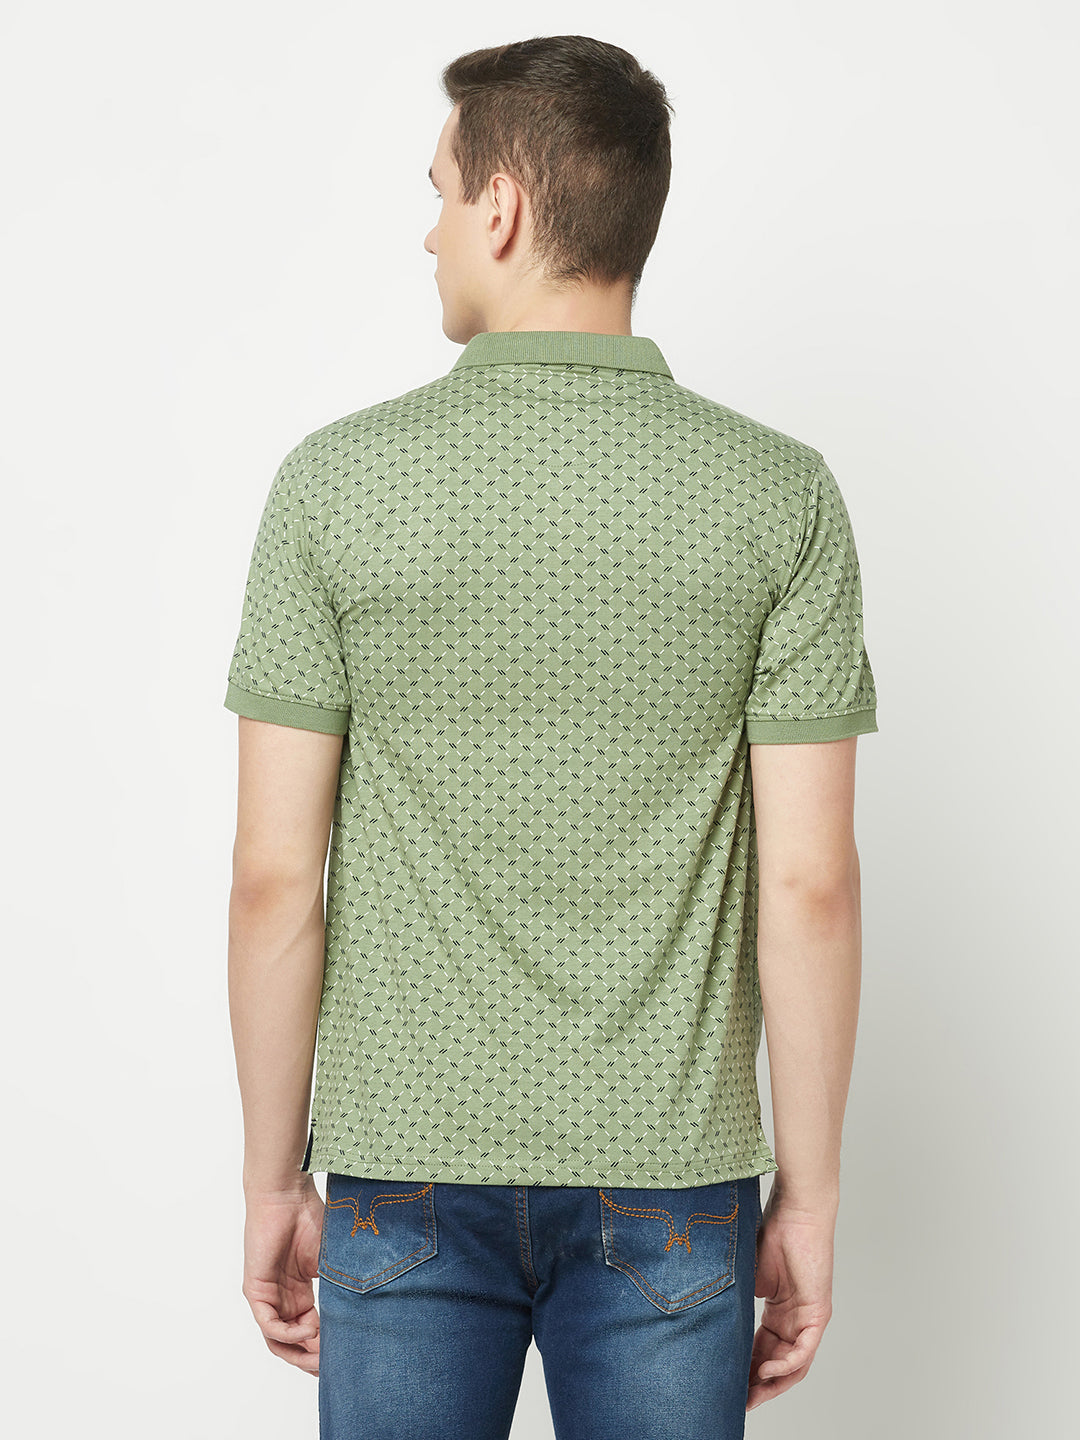  Fern Green Geometric Polo T-Shirt